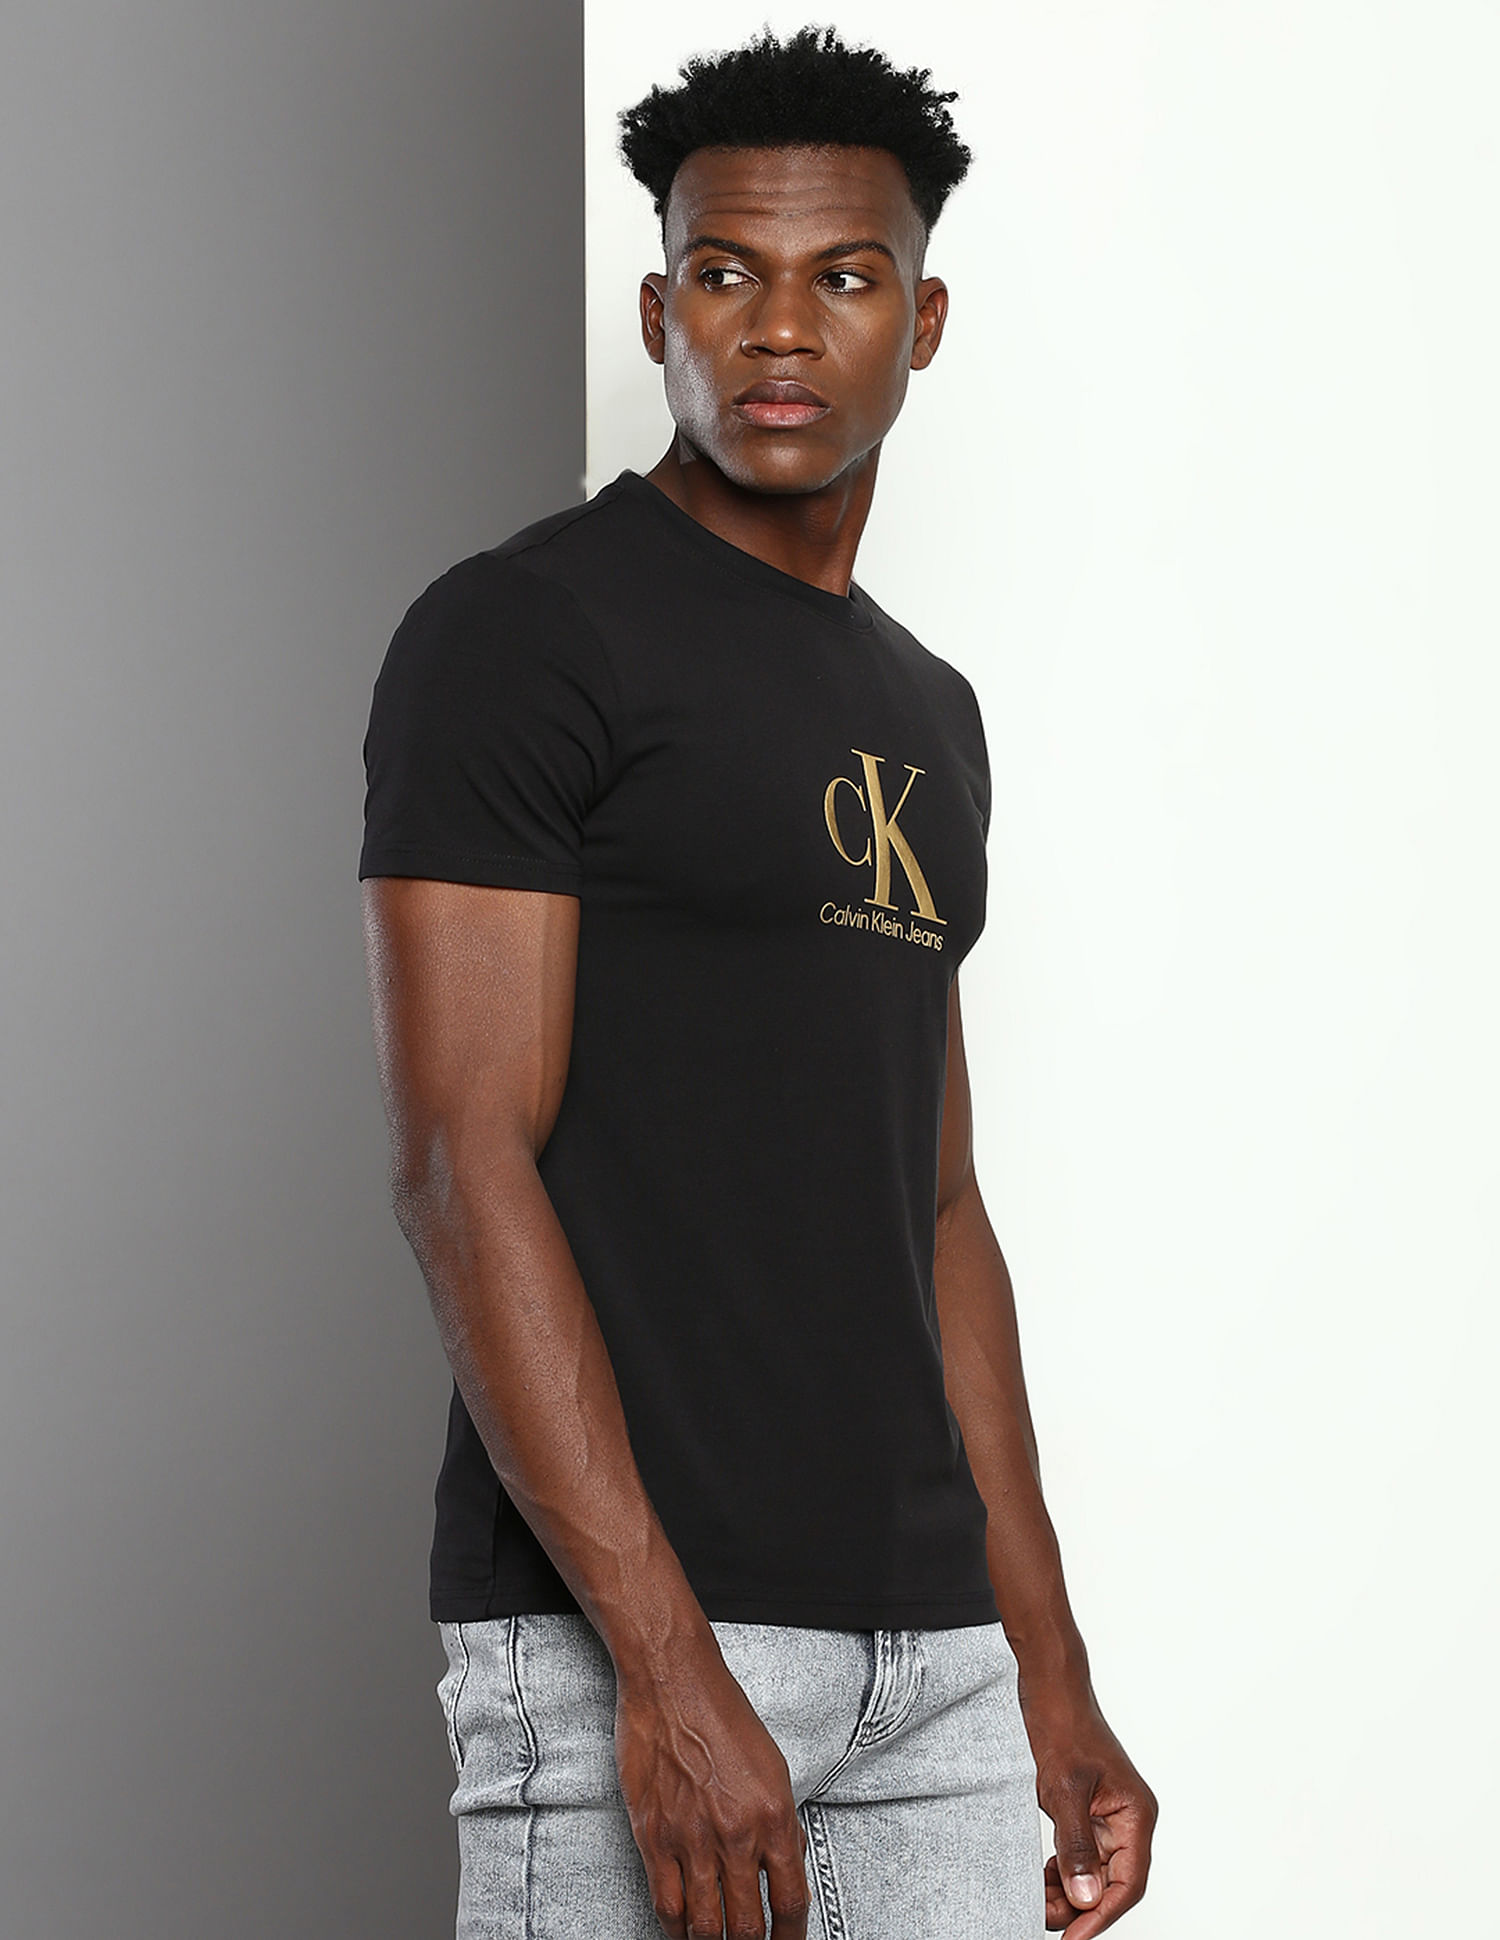 Buy Calvin Klein Brand Print Monogram Seasonal T-Shirt - NNNOW.com